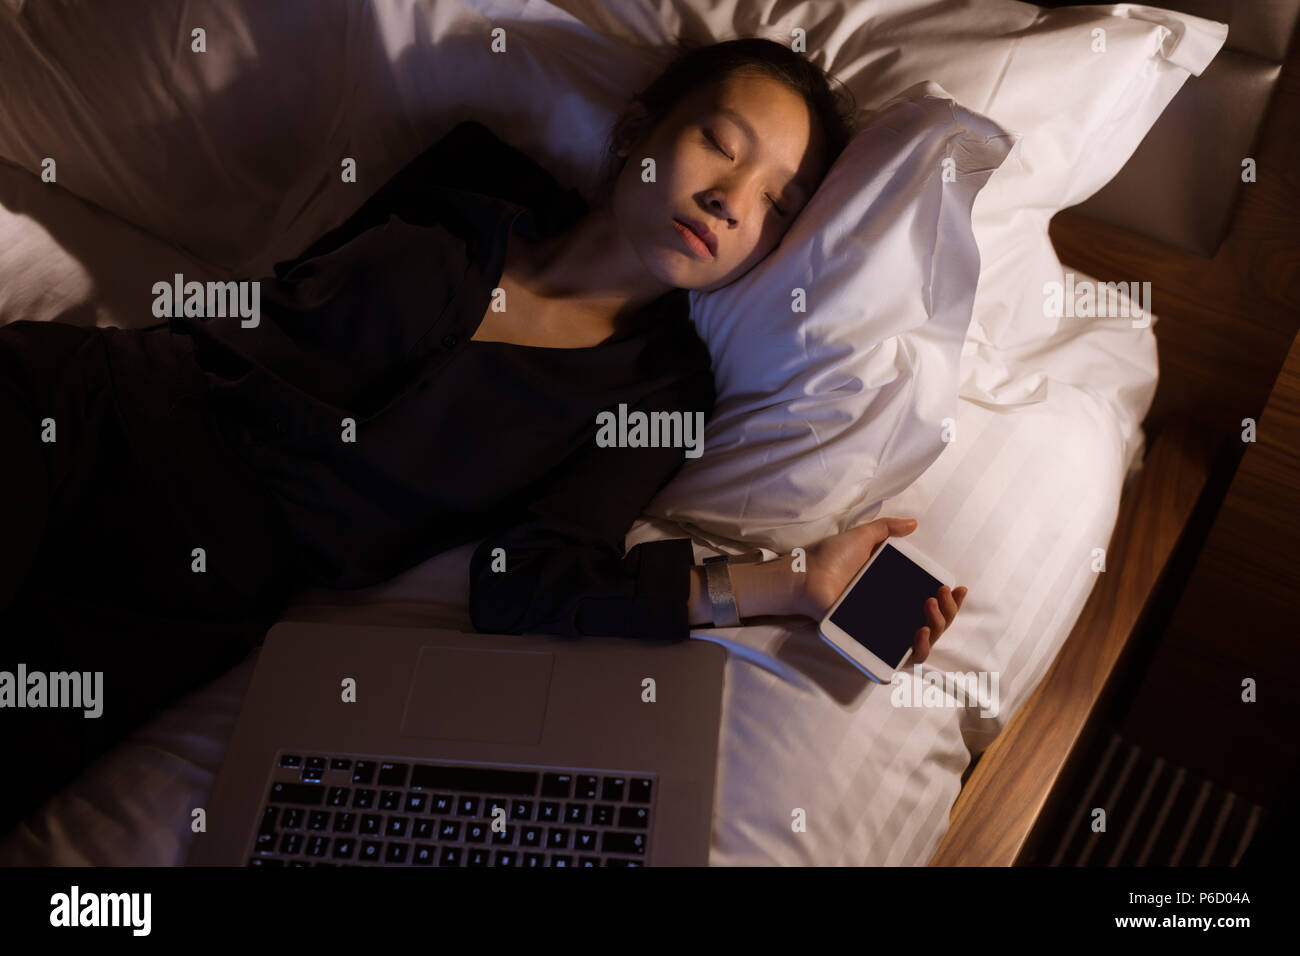 Tired woman sleeping avec ordinateur portable et mobile pone on bed Banque D'Images